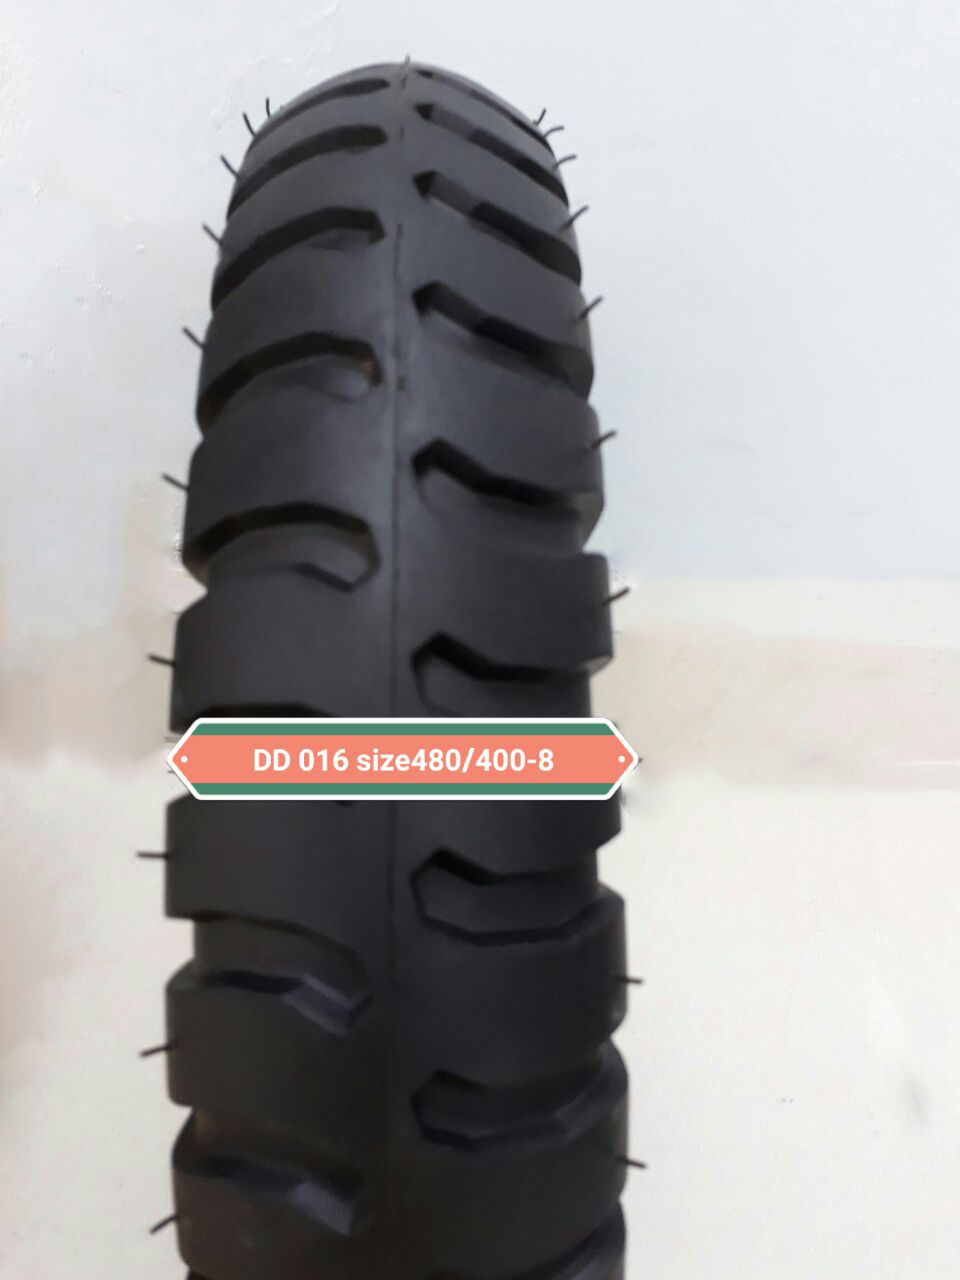 DD016 Wheelbarrow tires size 480/400-8